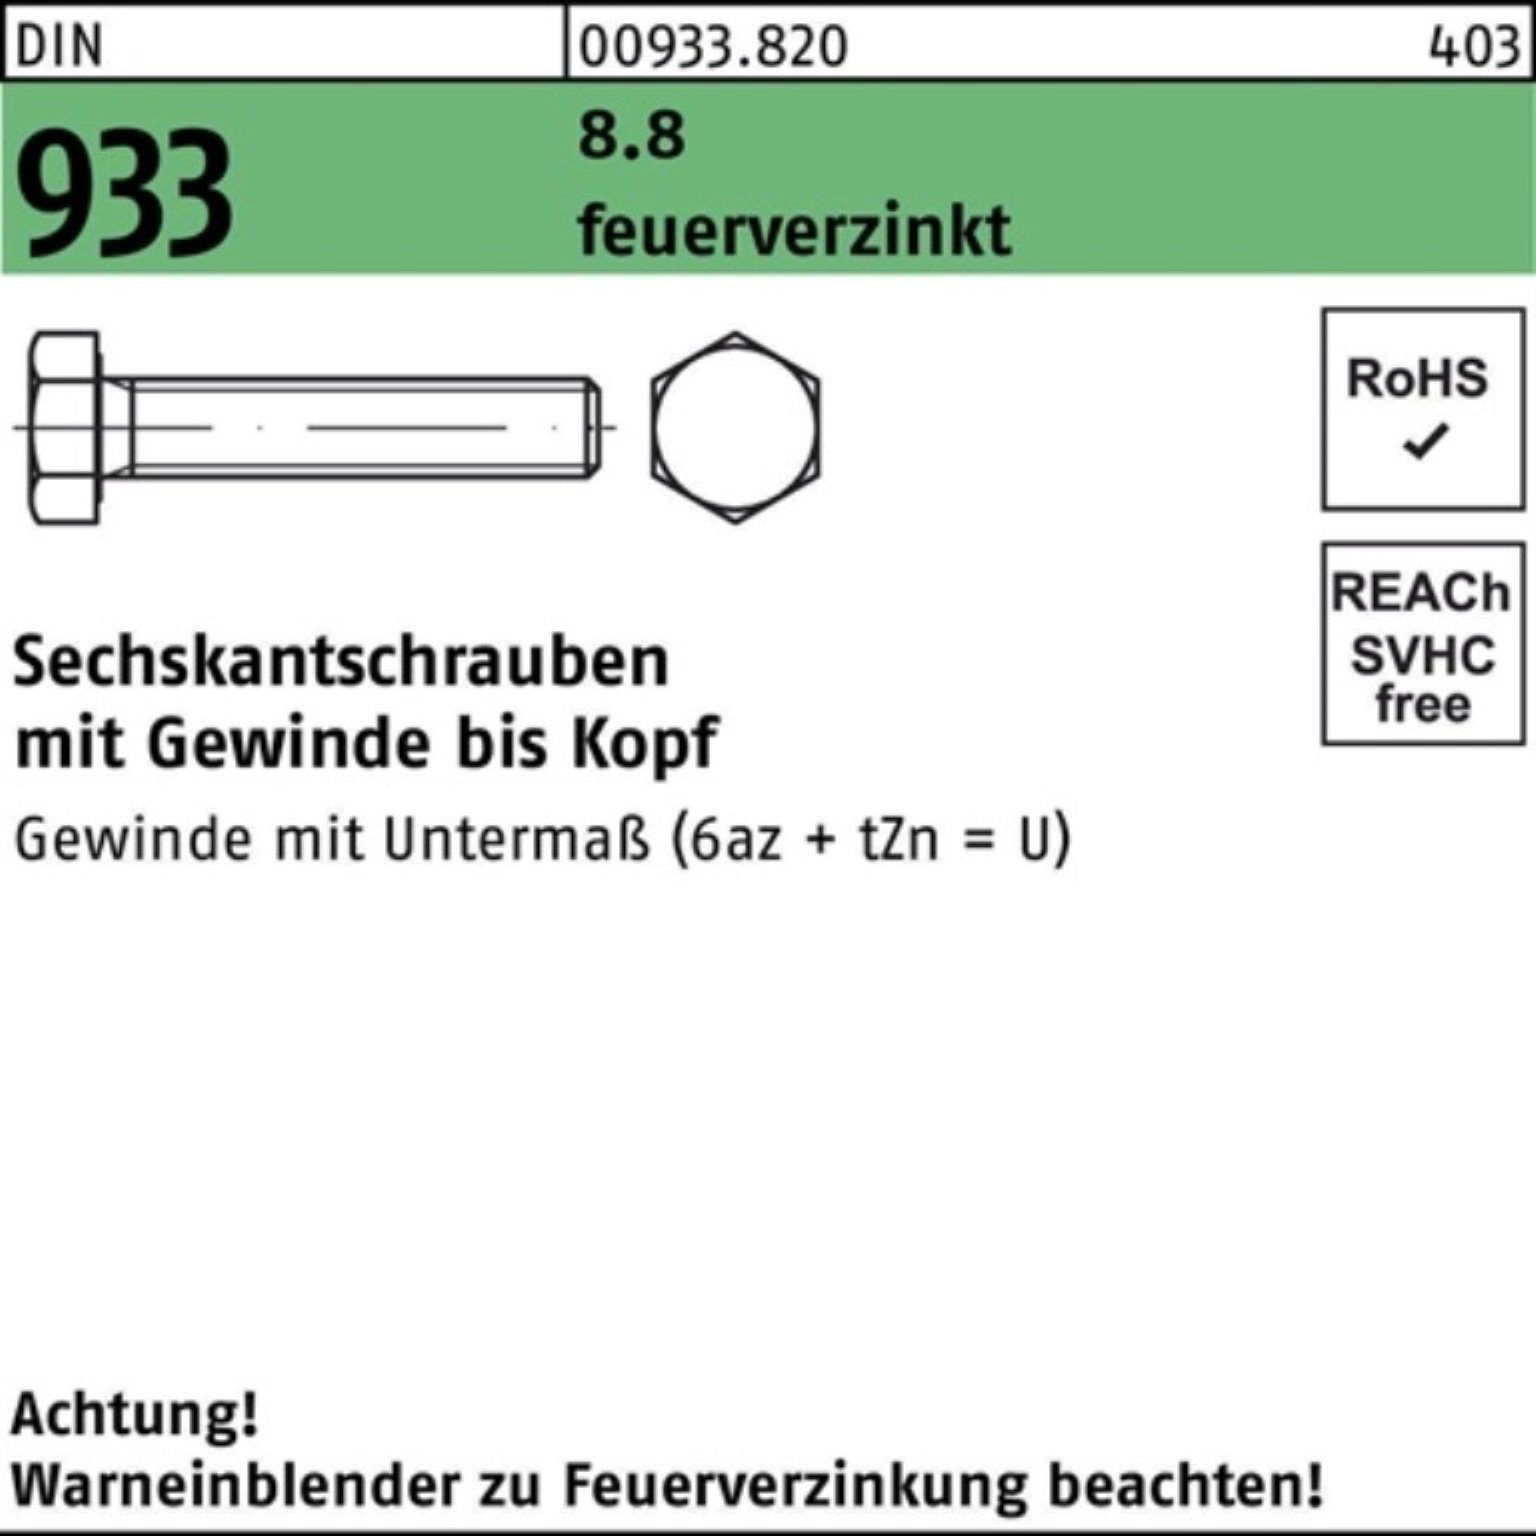 Reyher Sechskantschraube 100er Pack Sechskantschraube Stü 933 DIN M30x 8.8 140 1 feuerverz. VG